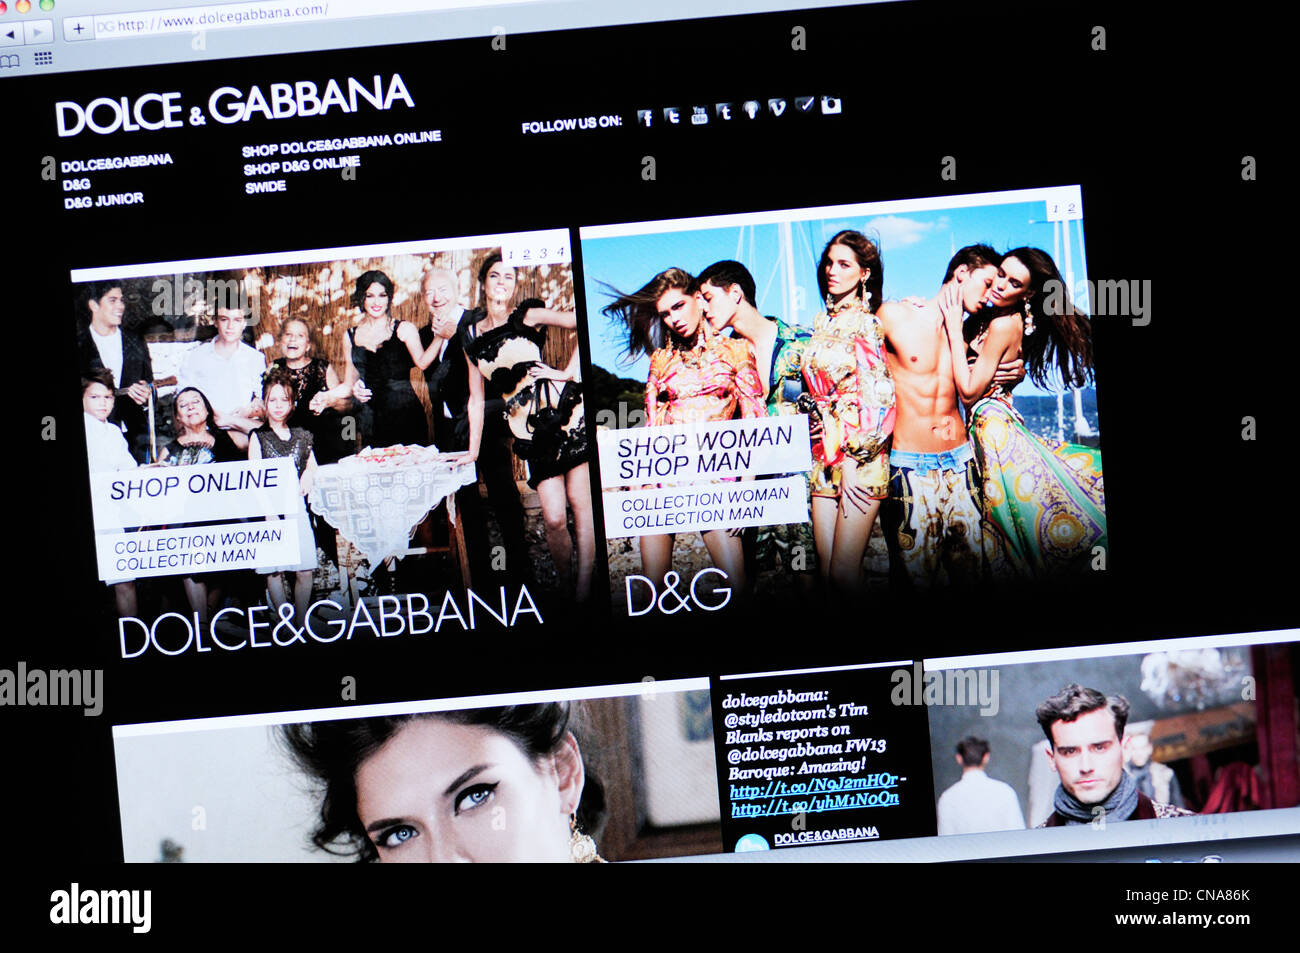 dolce and gabbana website